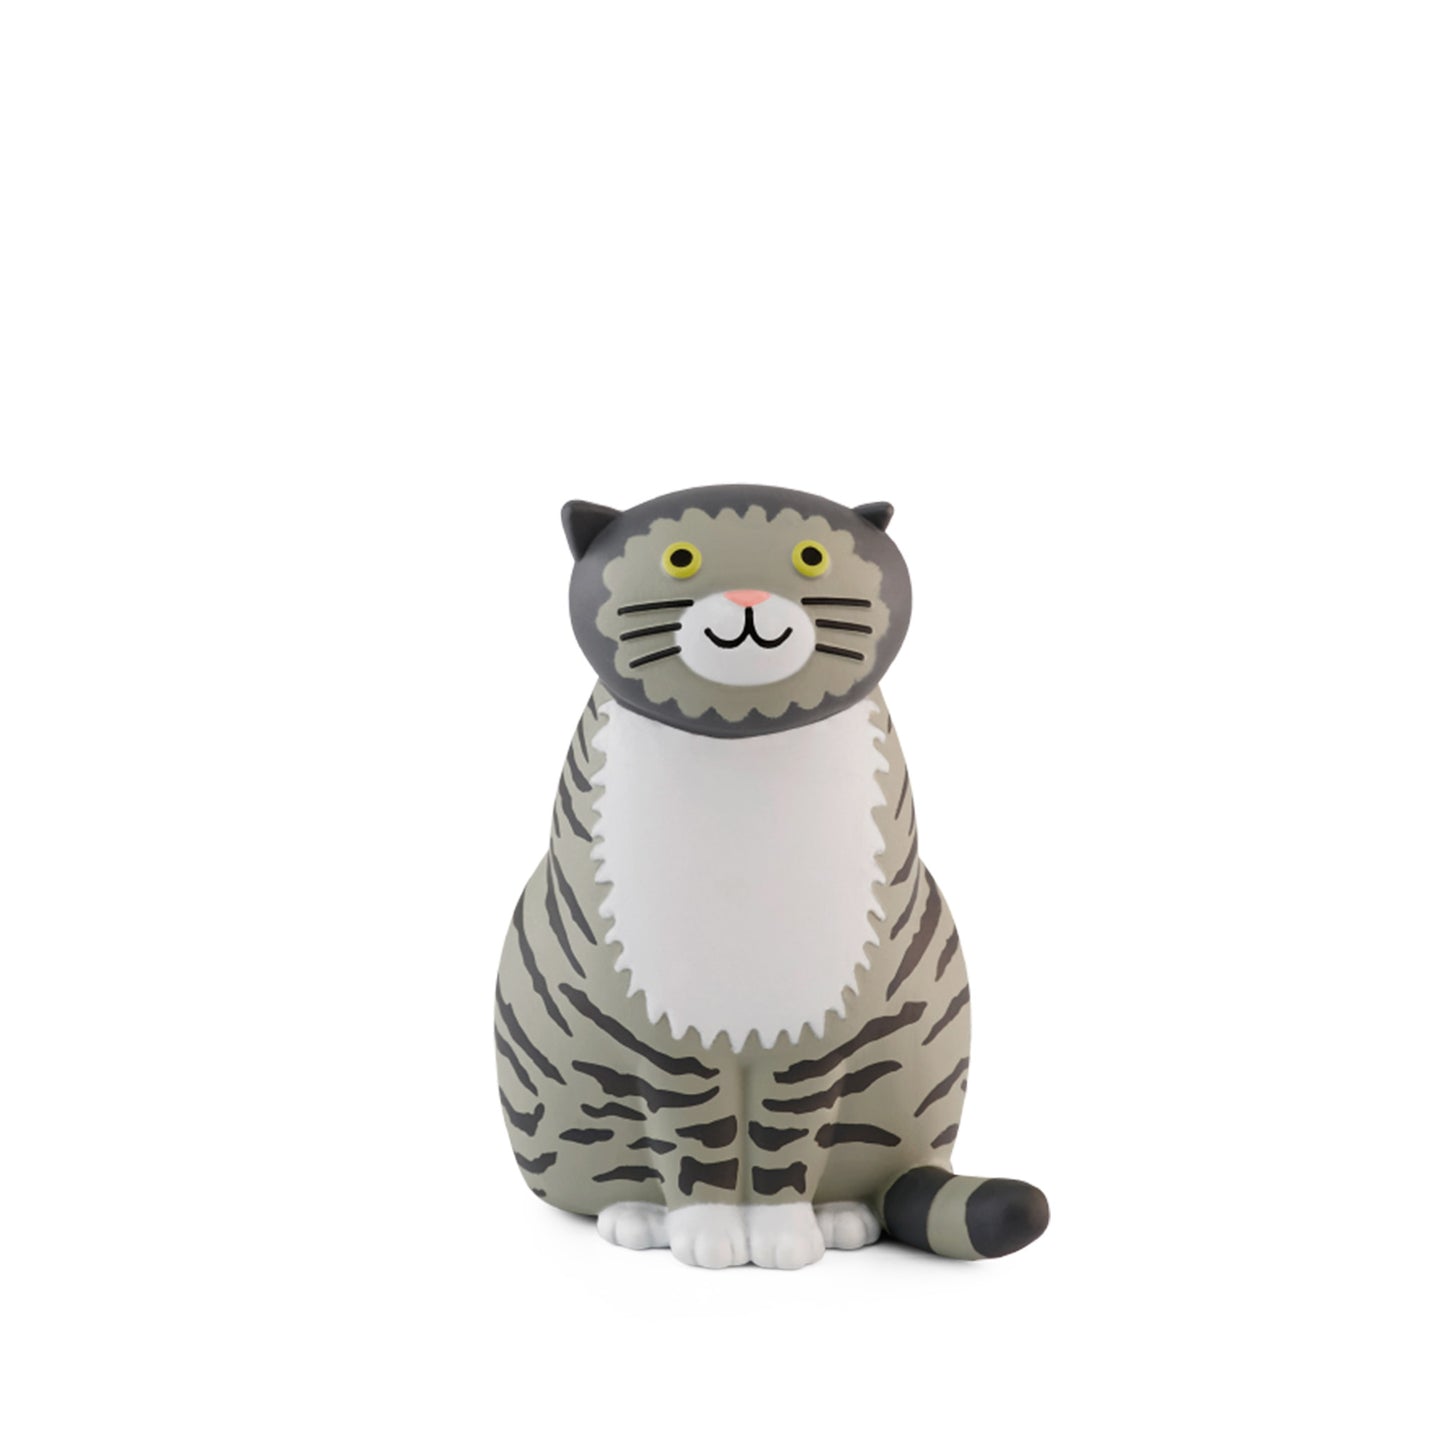 Tonie - Mog the forgetful cat - Judith Kerr cutout